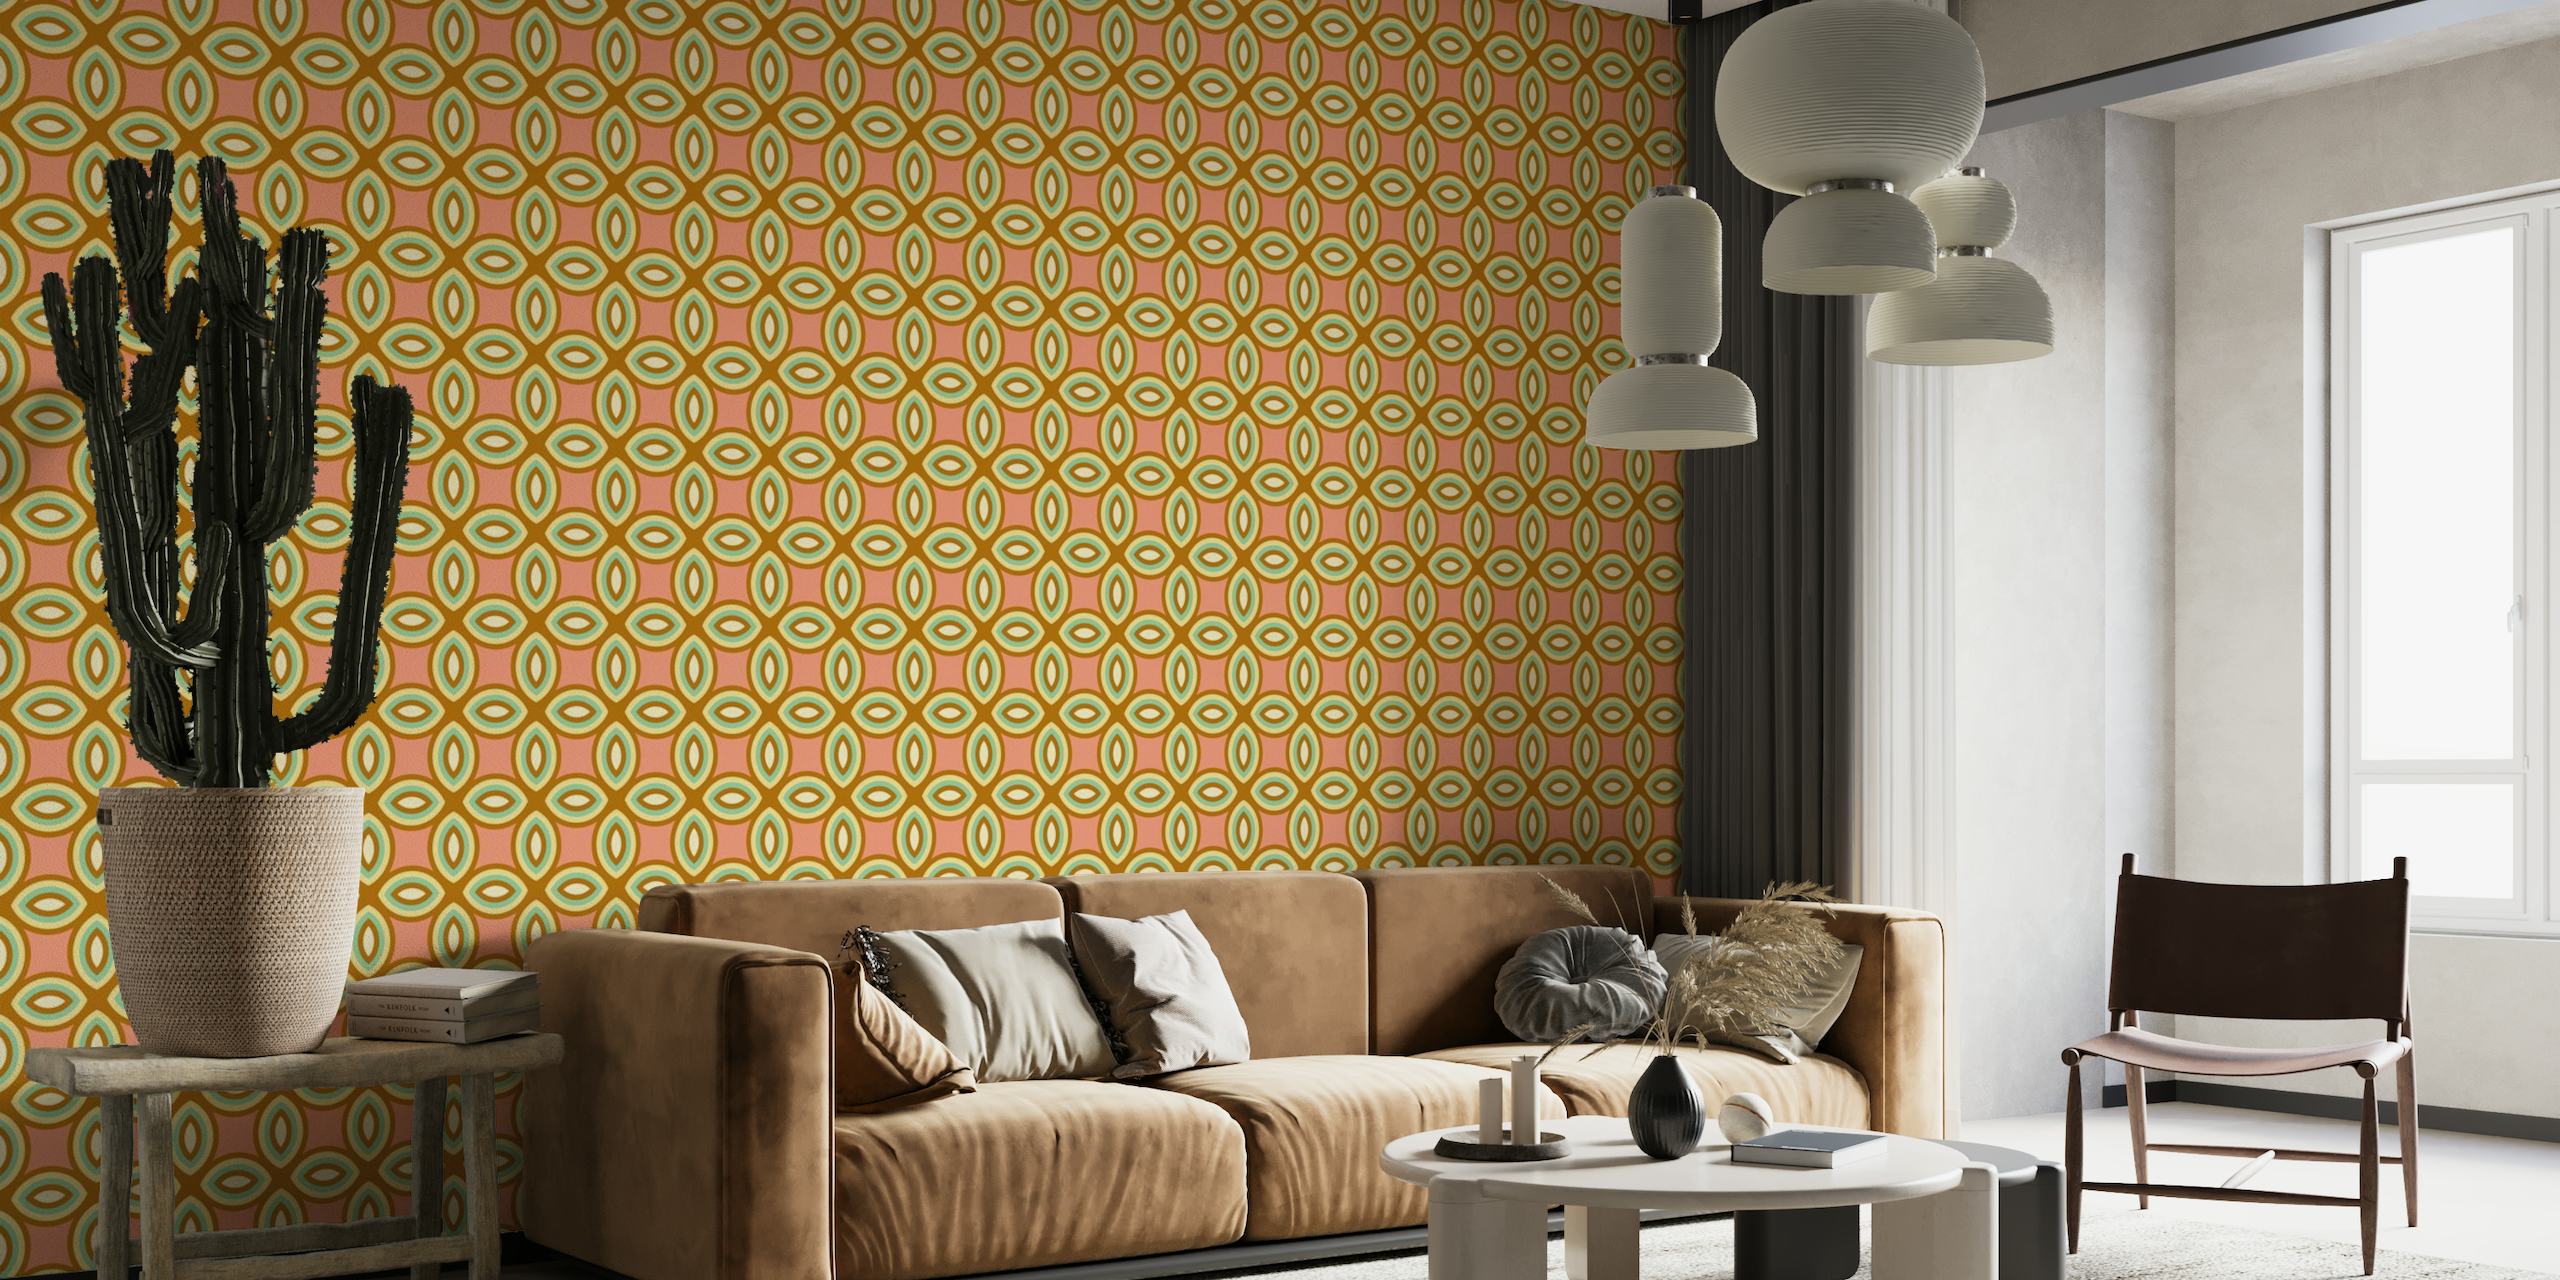 COURTYARD Geometric Tile - Retro Pink wallpaper